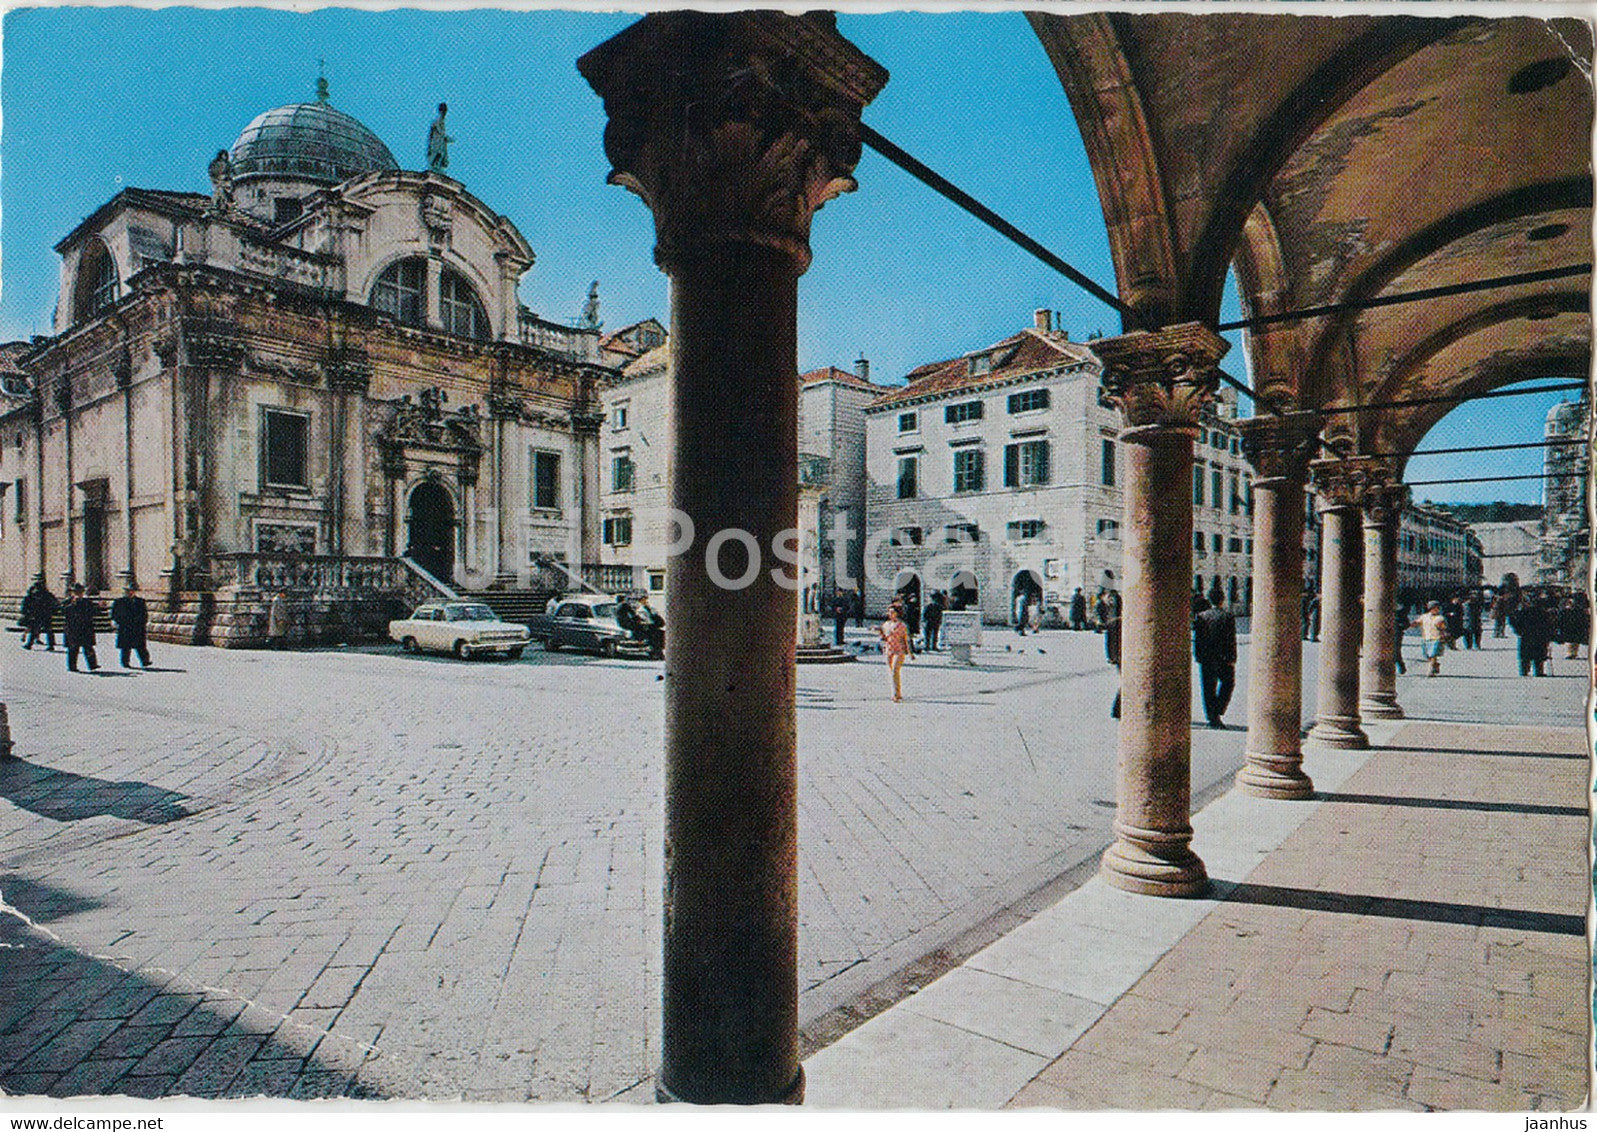 Dubrovnik - Palaca Sponza i crkva sv Vlaha - The Sponza Palace andthe Church -1977 - Yugoslavia - Croatia - used - JH Postcards